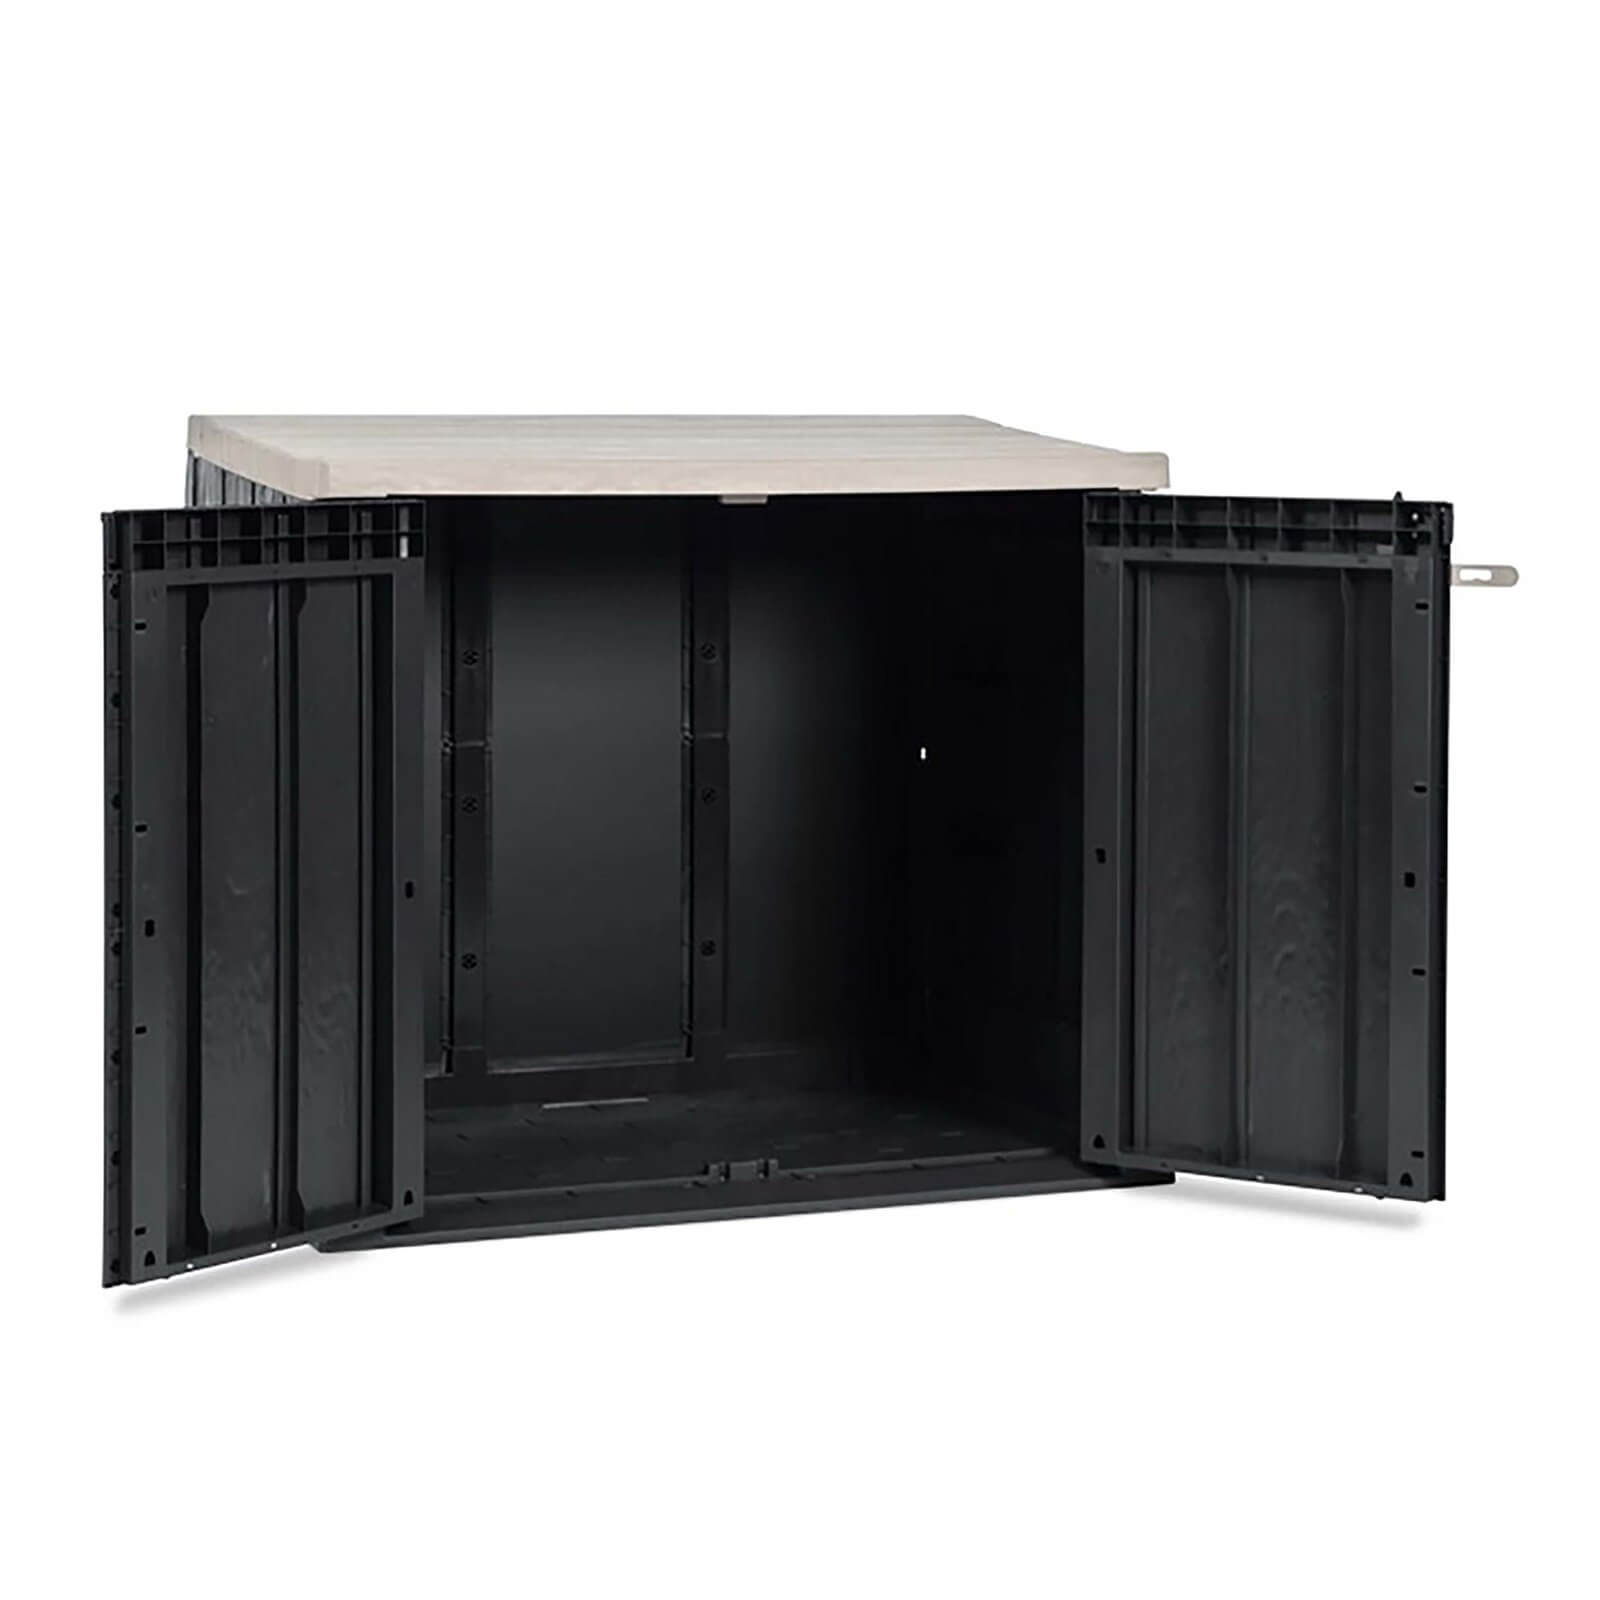 Toomax Stora Way XL 1270L Garden Storage Box in Warm Grey